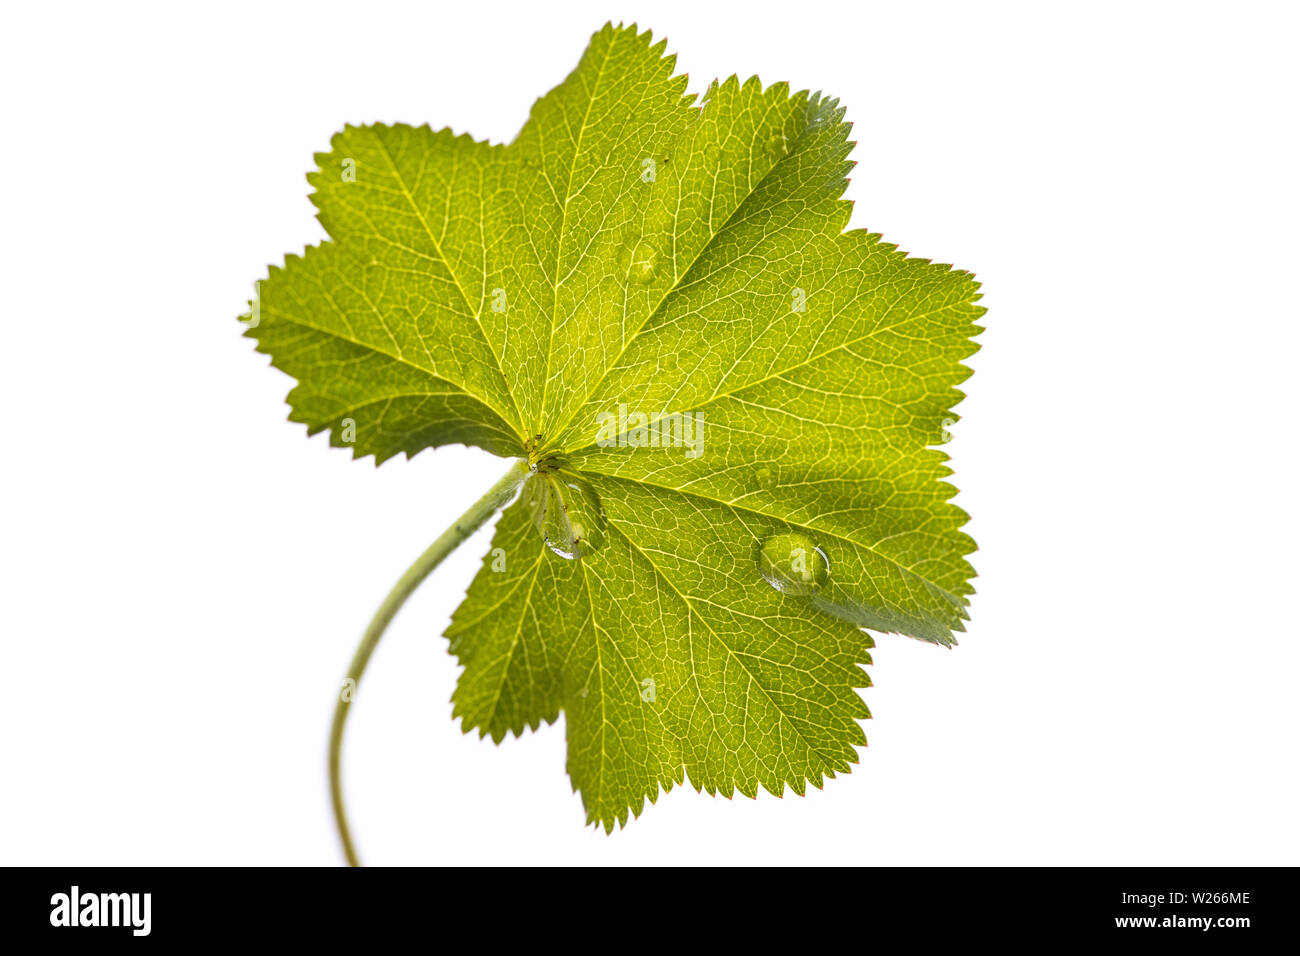 healing / medicinal plants: lady's mantle (Alchemilla vulgaris) - single leaf isolated on white background Stock Photo